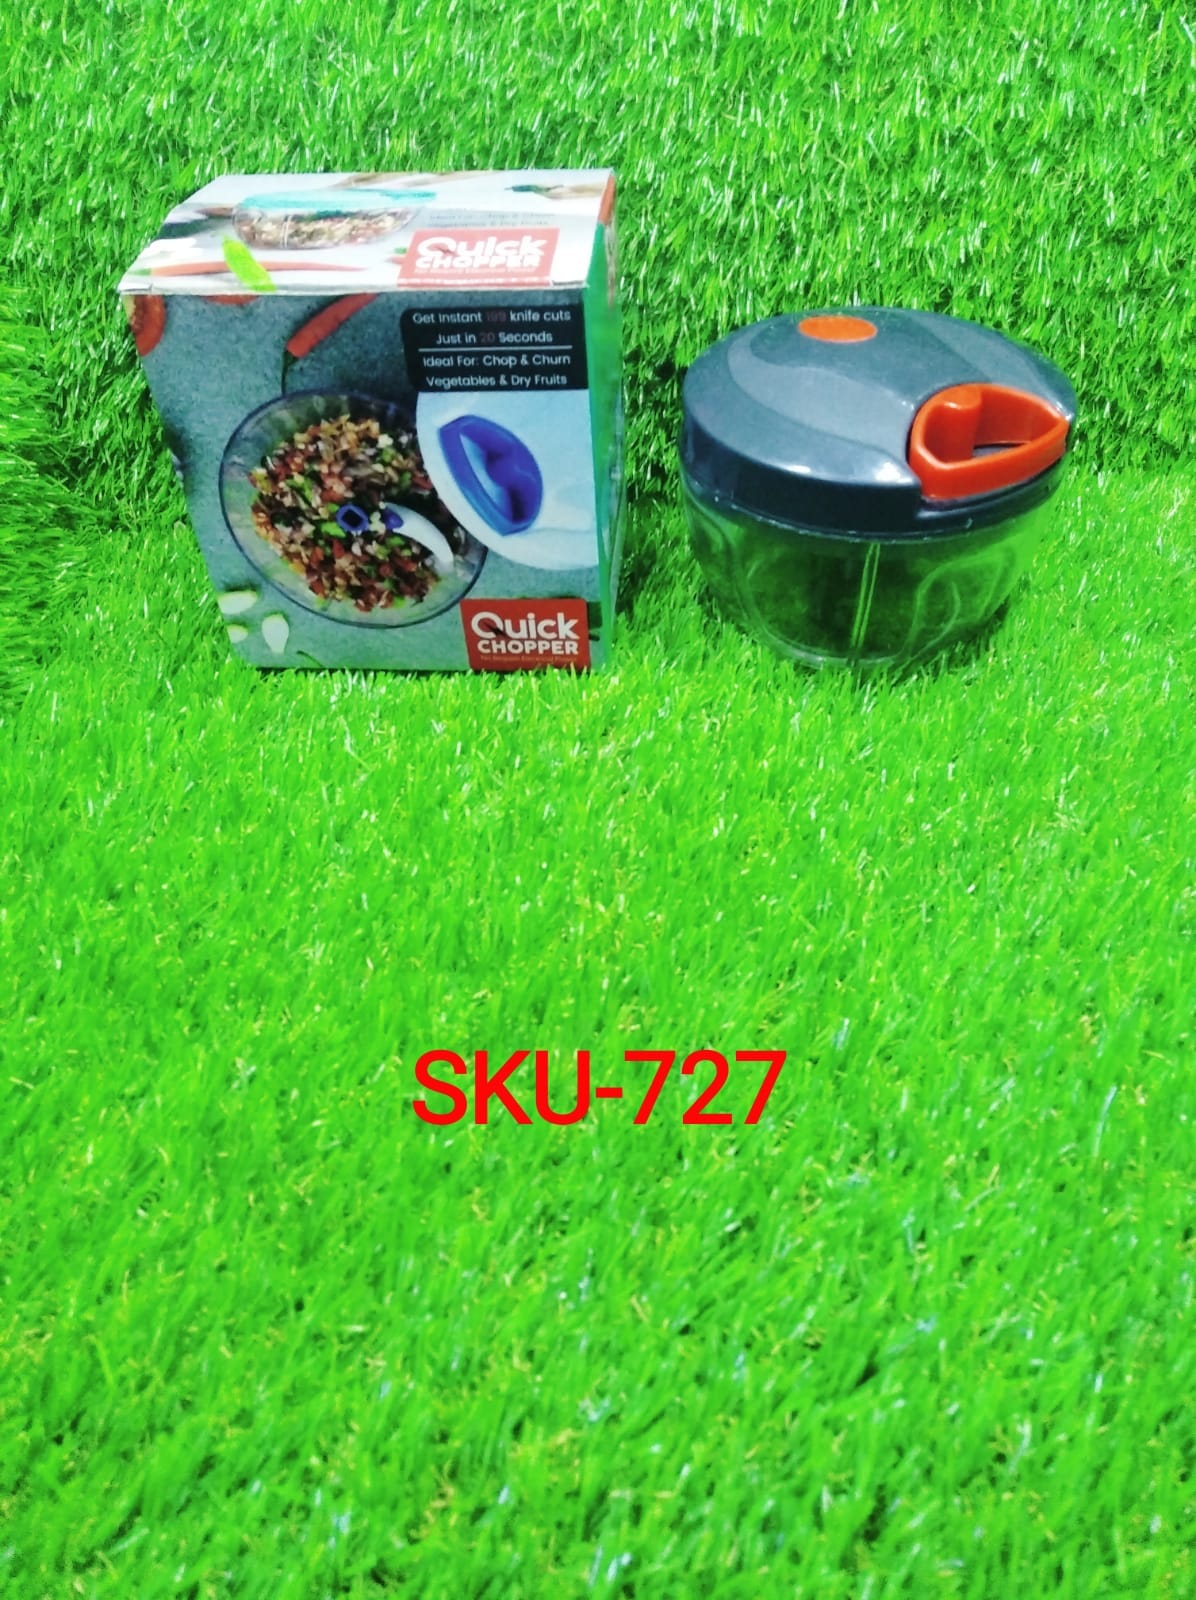 0727 Manual Handy and Compact Vegetable Chopper/Blender DeoDap